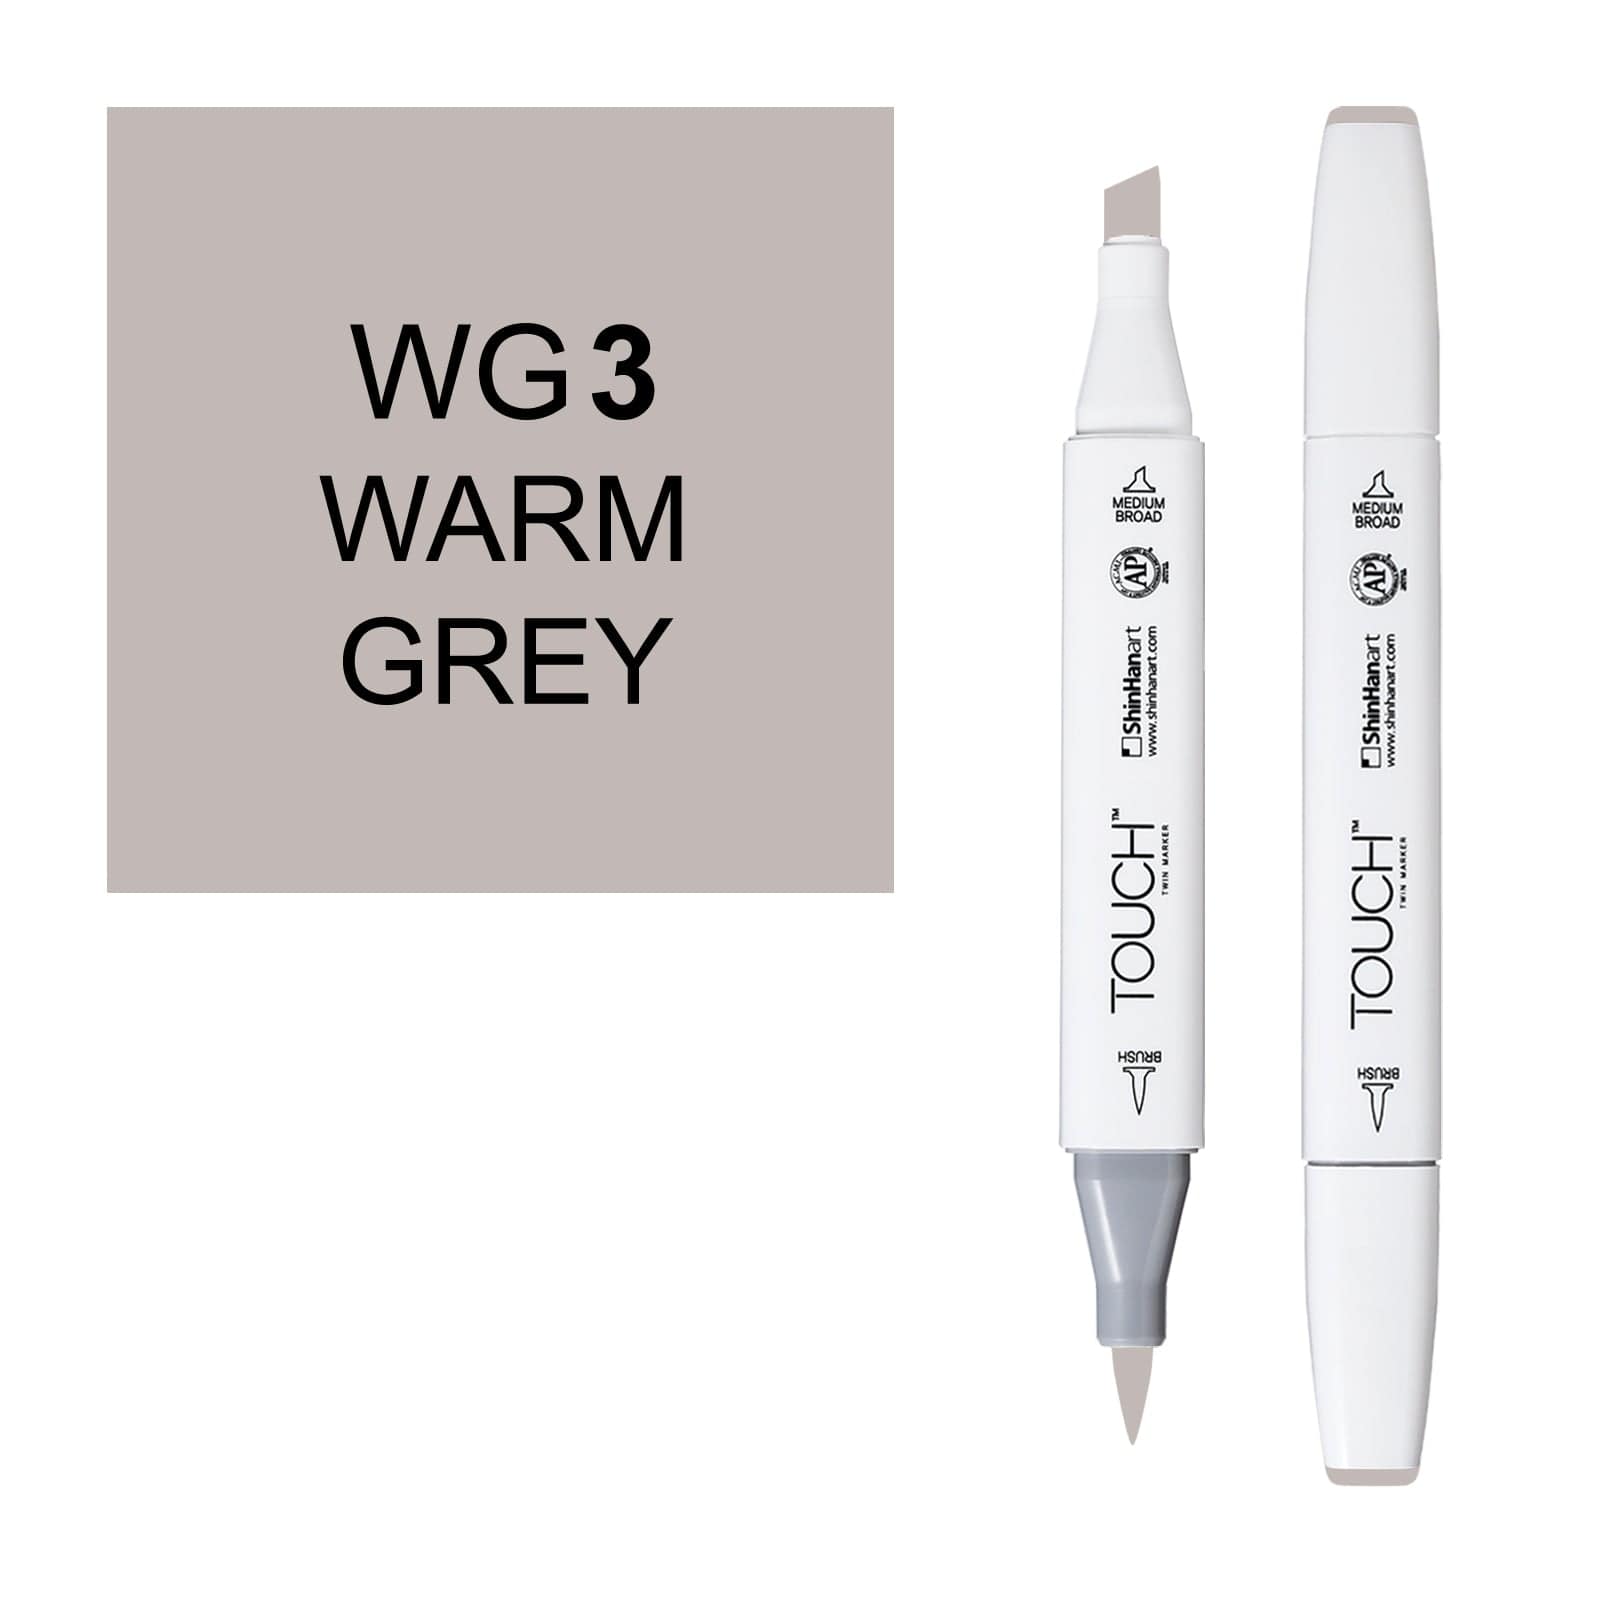 ShinHanart Touch Twin Brush Markers 3 warm grey